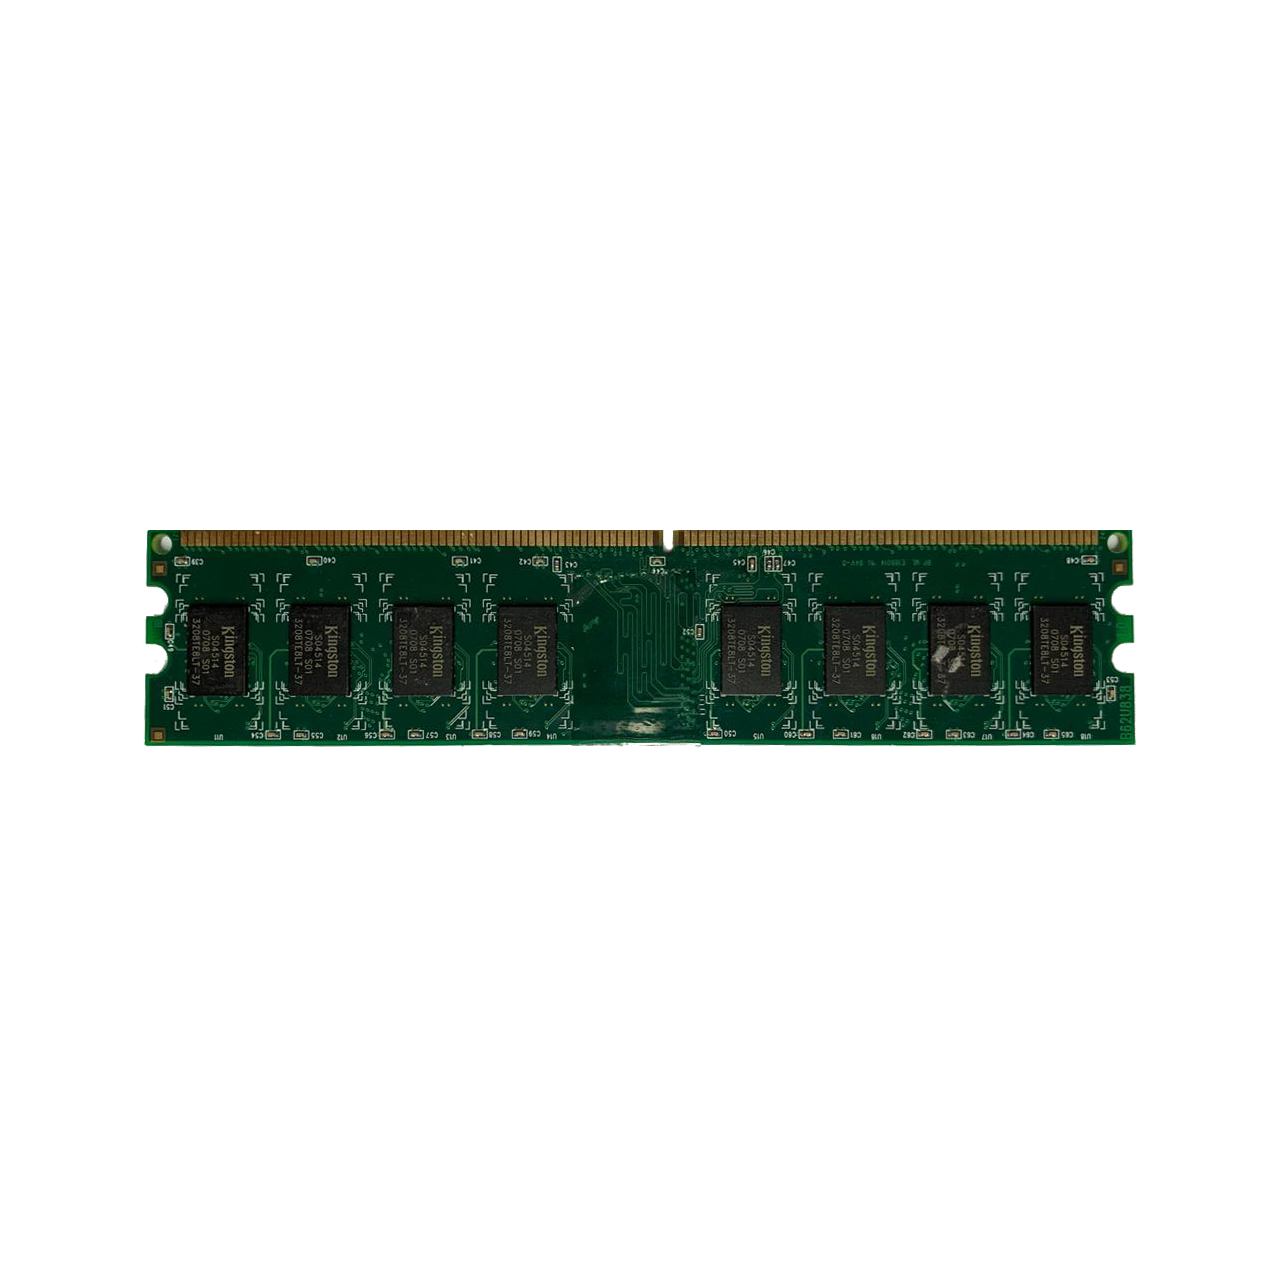 رم DDR4 دو کاناله 2400 مگاهرتز کینگستون مدل Kvr24n17s8/8 CL17  ظرفیت 8 گیگابایت